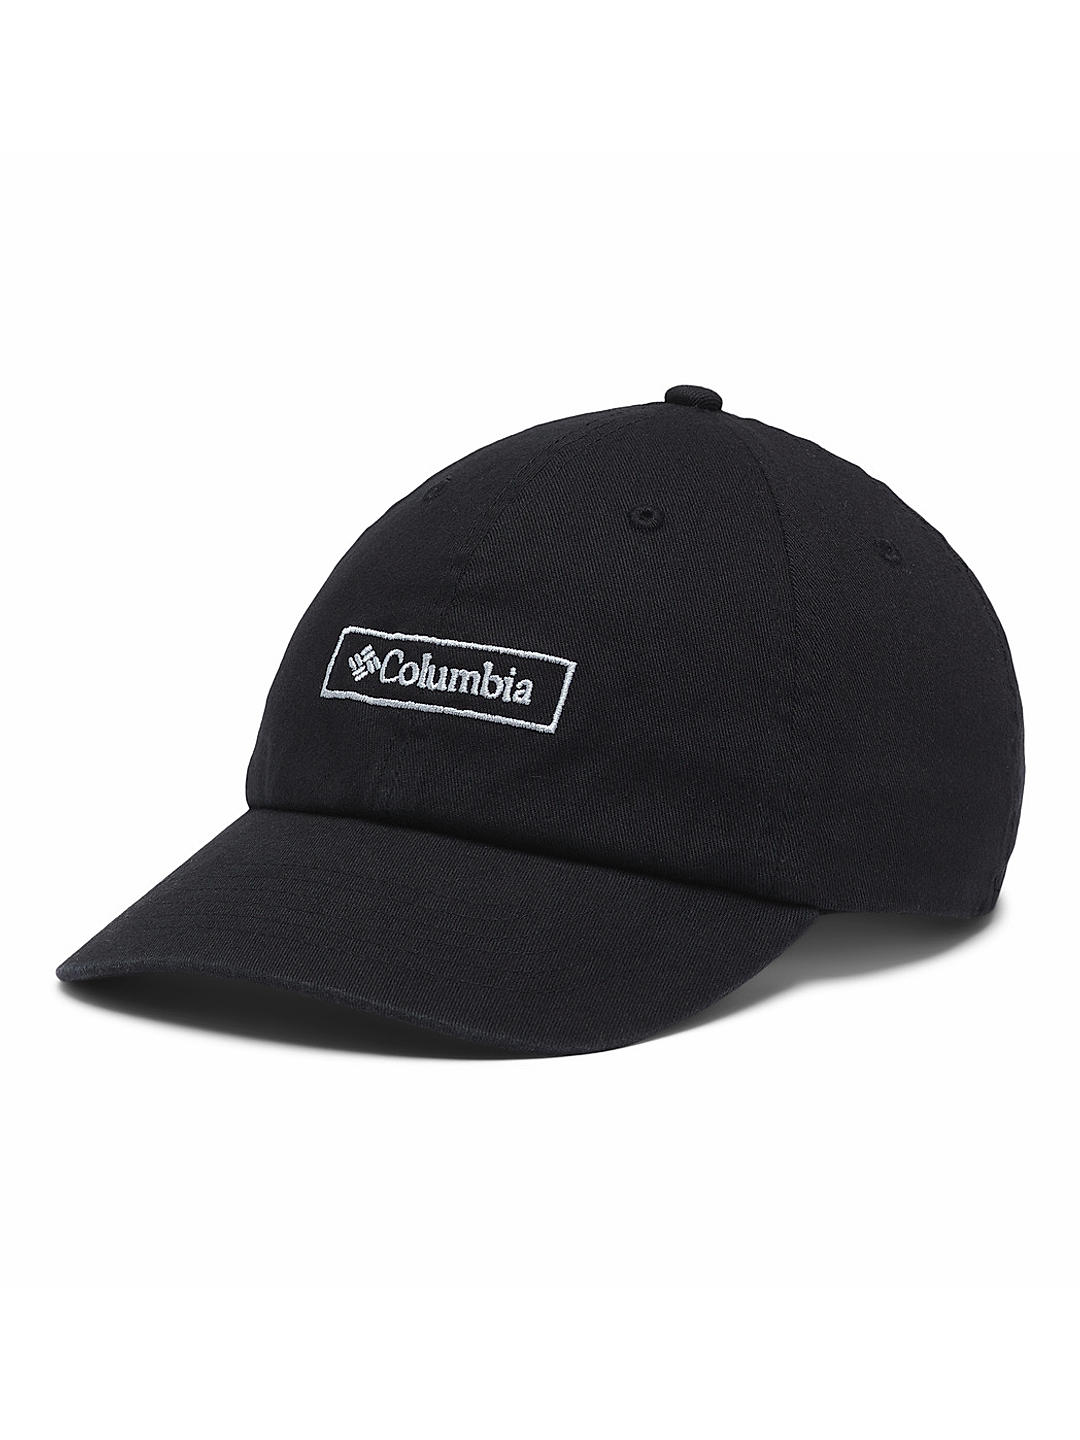 Buy Black Columbia Logo Dad Cap for Men and Women Online at Columbia  Sportswear